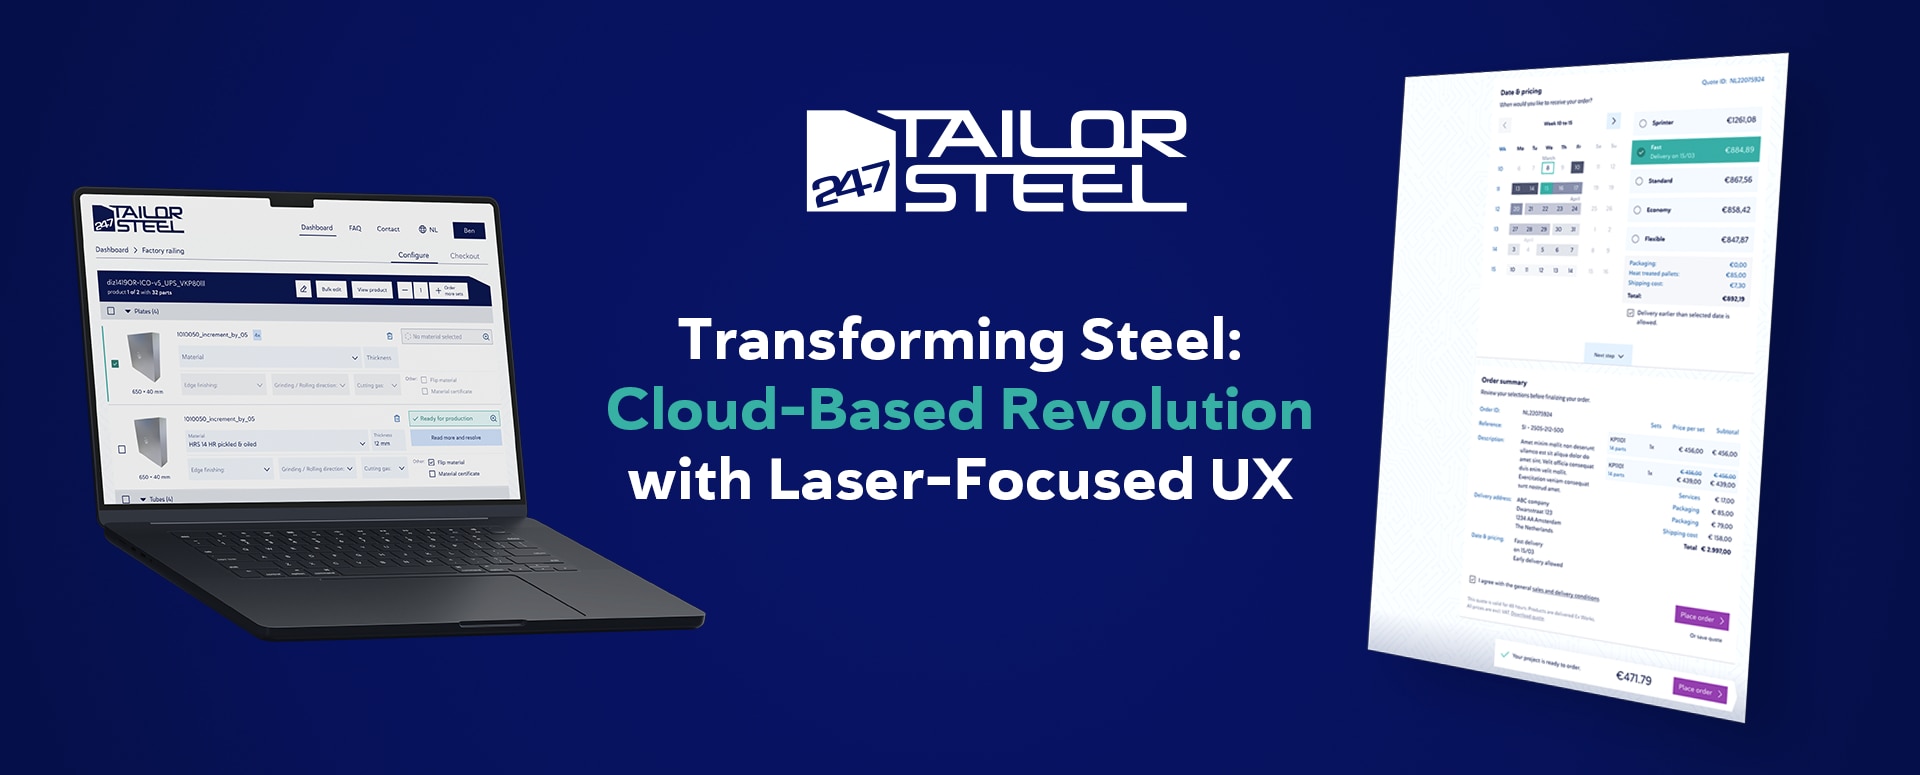 Staal transformeren: Cloud-based revolutie met laser-focused UX